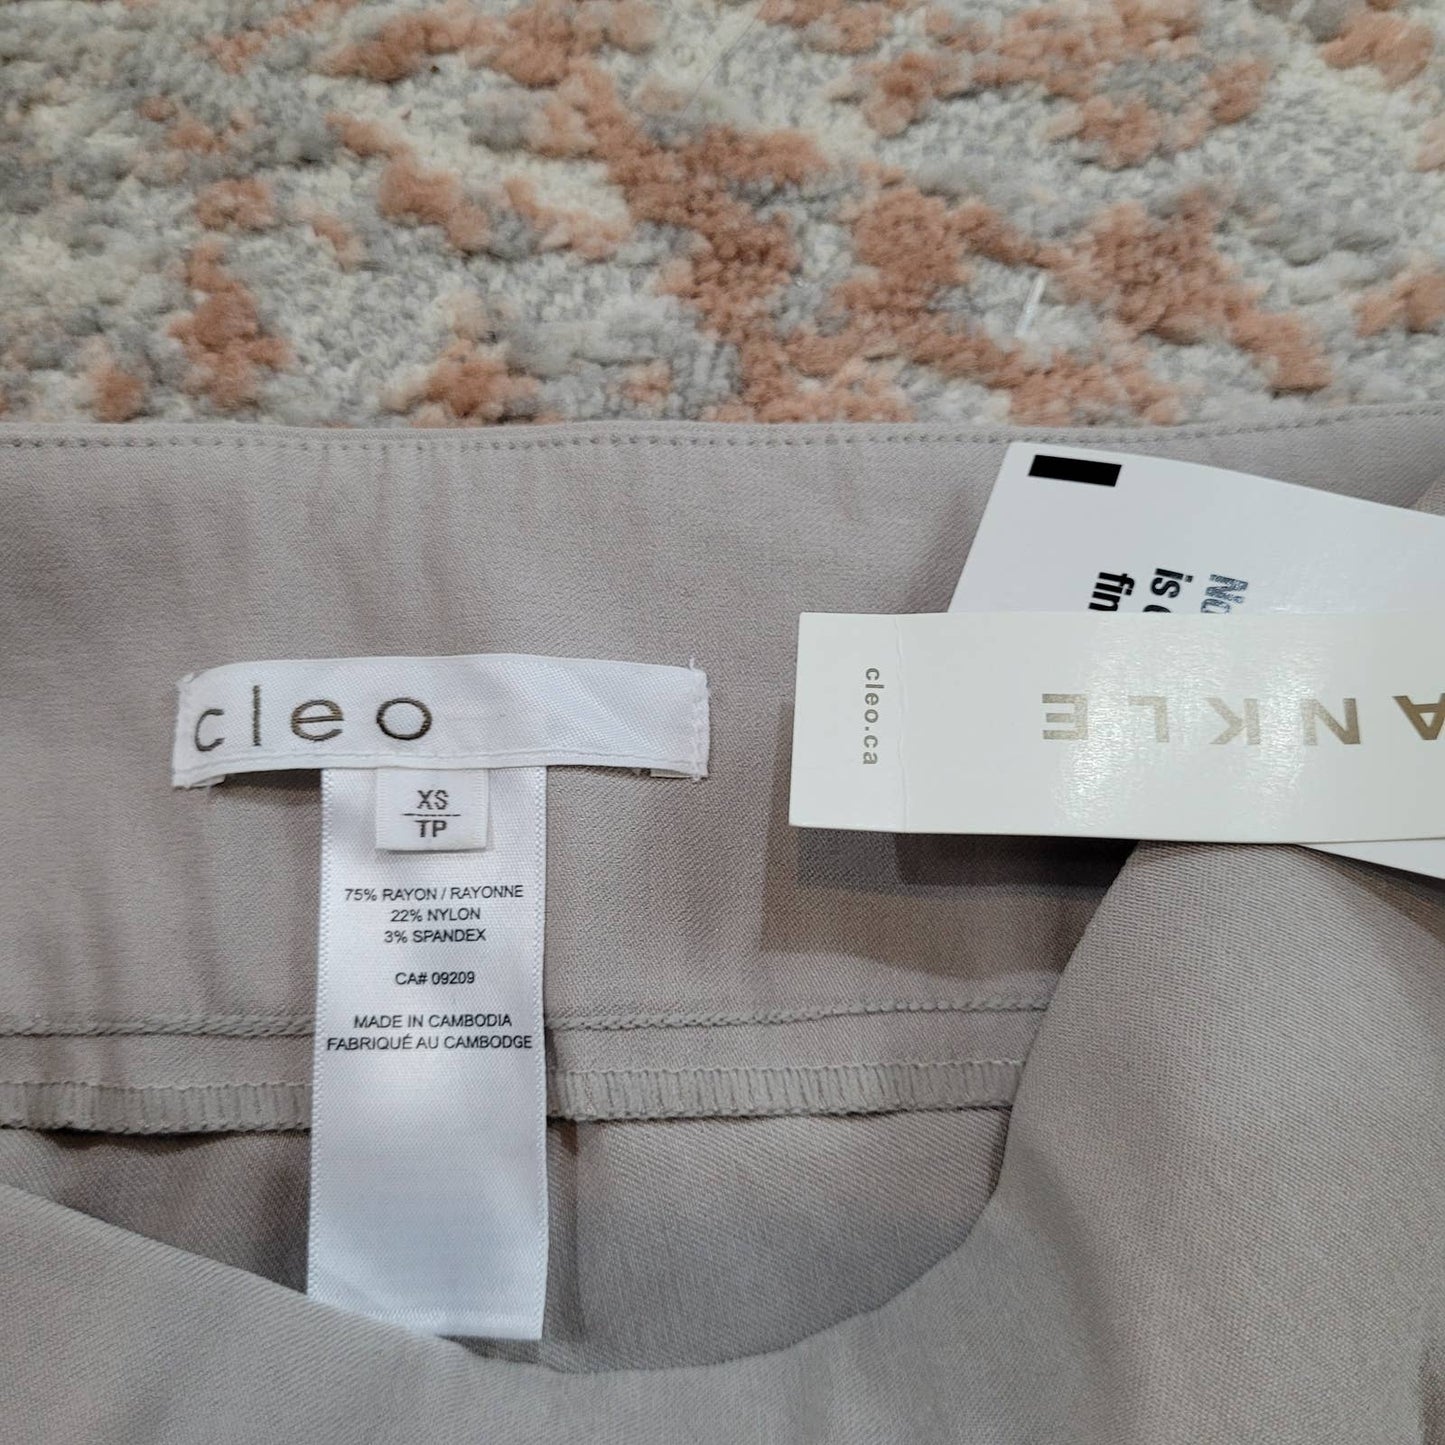 Cleo Ankle Pants with Rhinestone Accents - Size Extra SmallMarkita's ClosetCleo